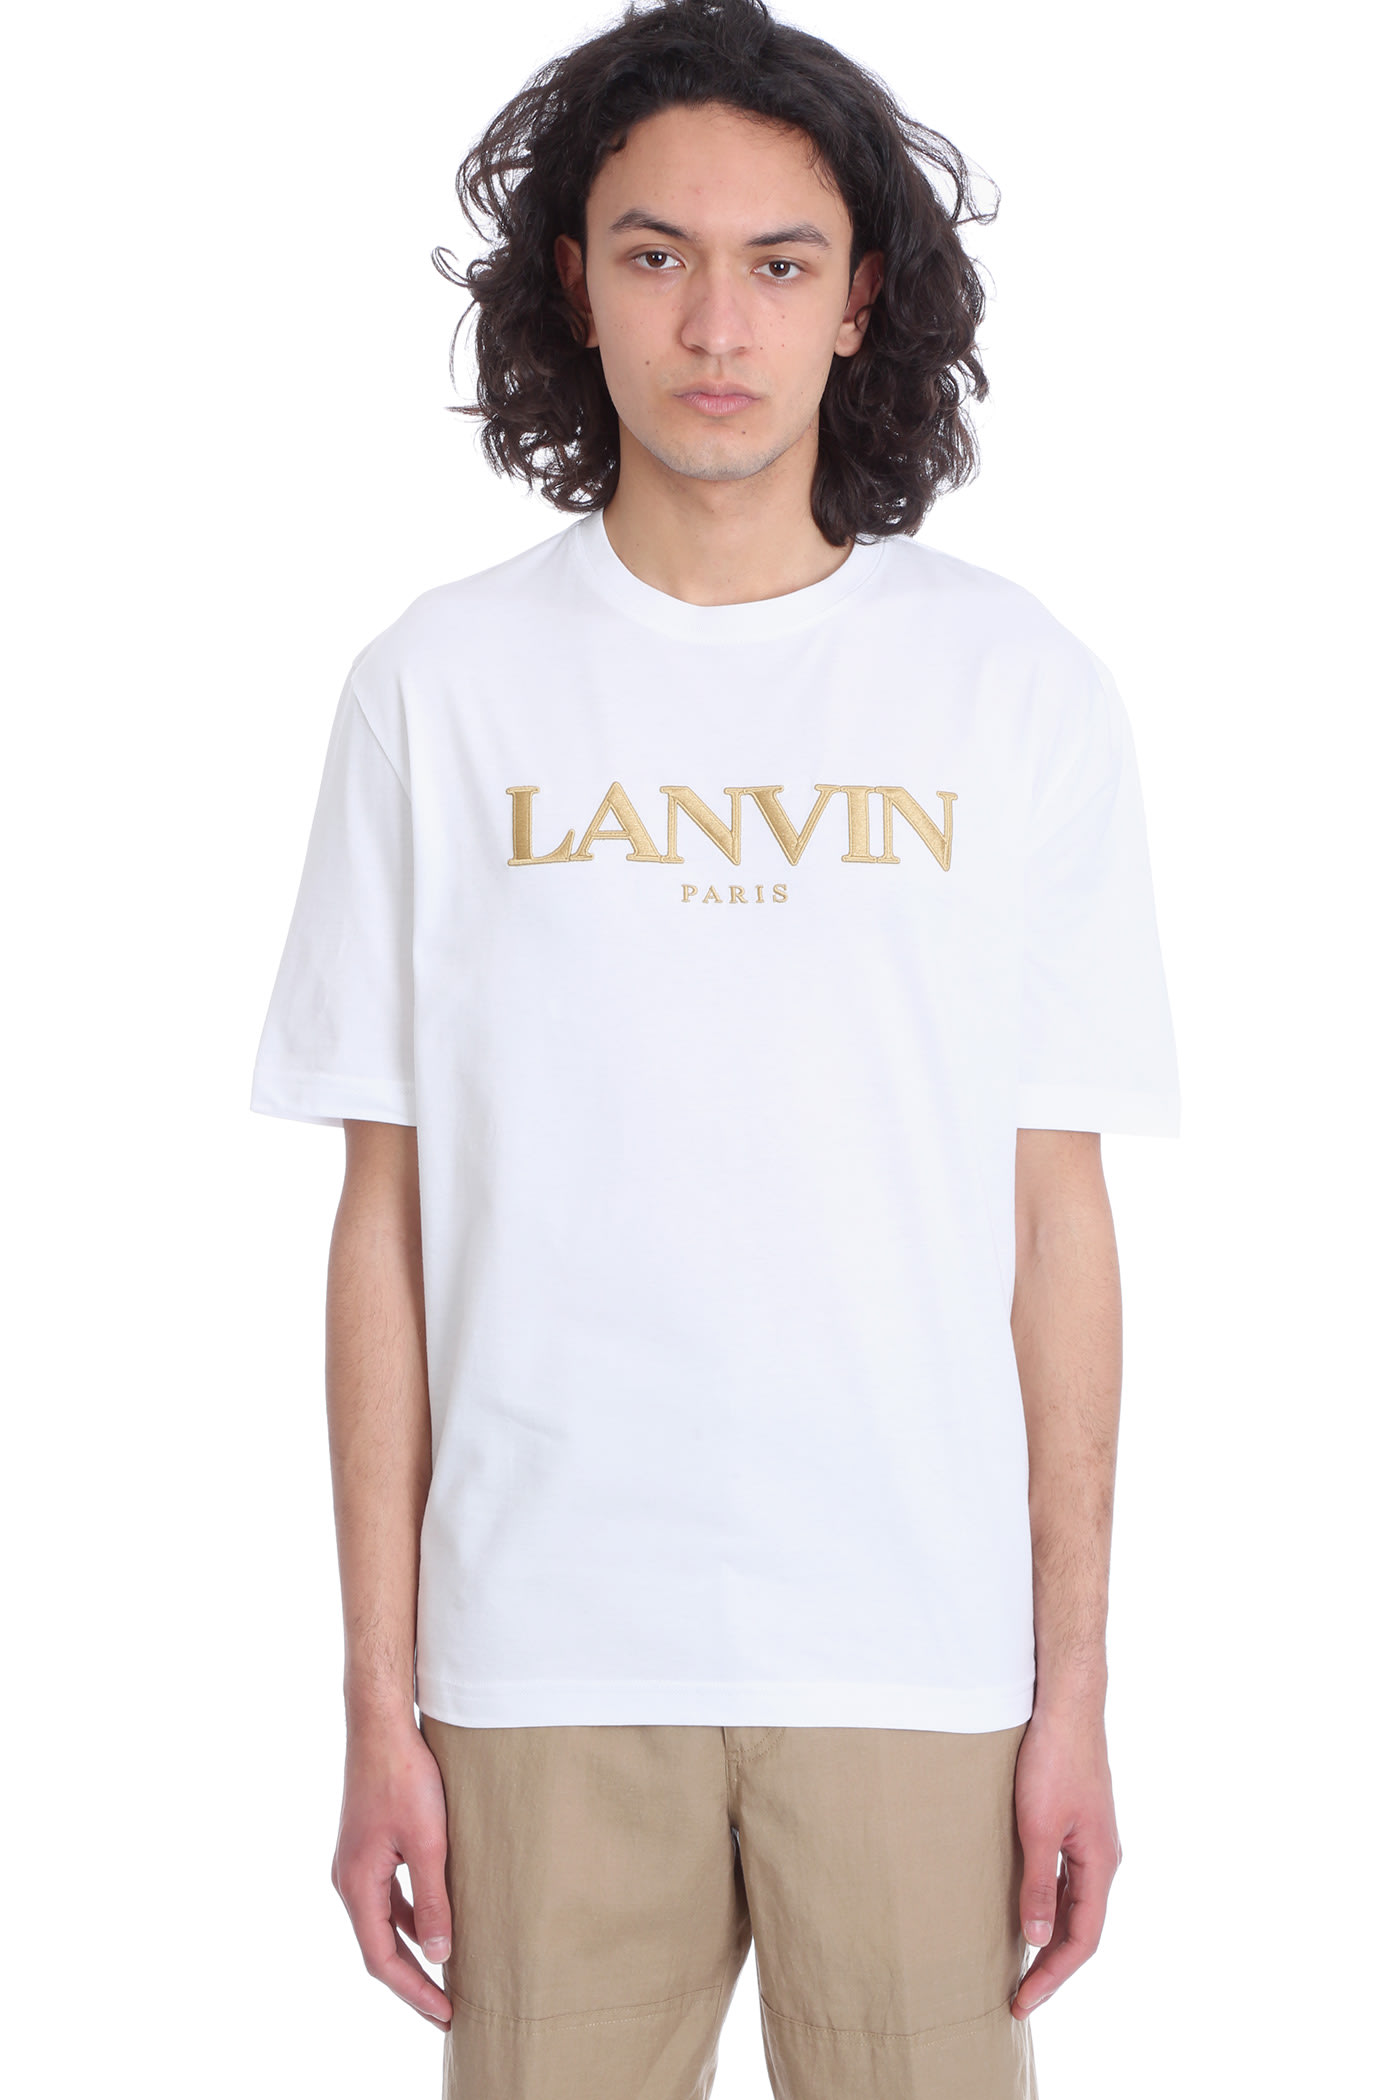 Lanvin T-SHIRT IN WHITE COTTON